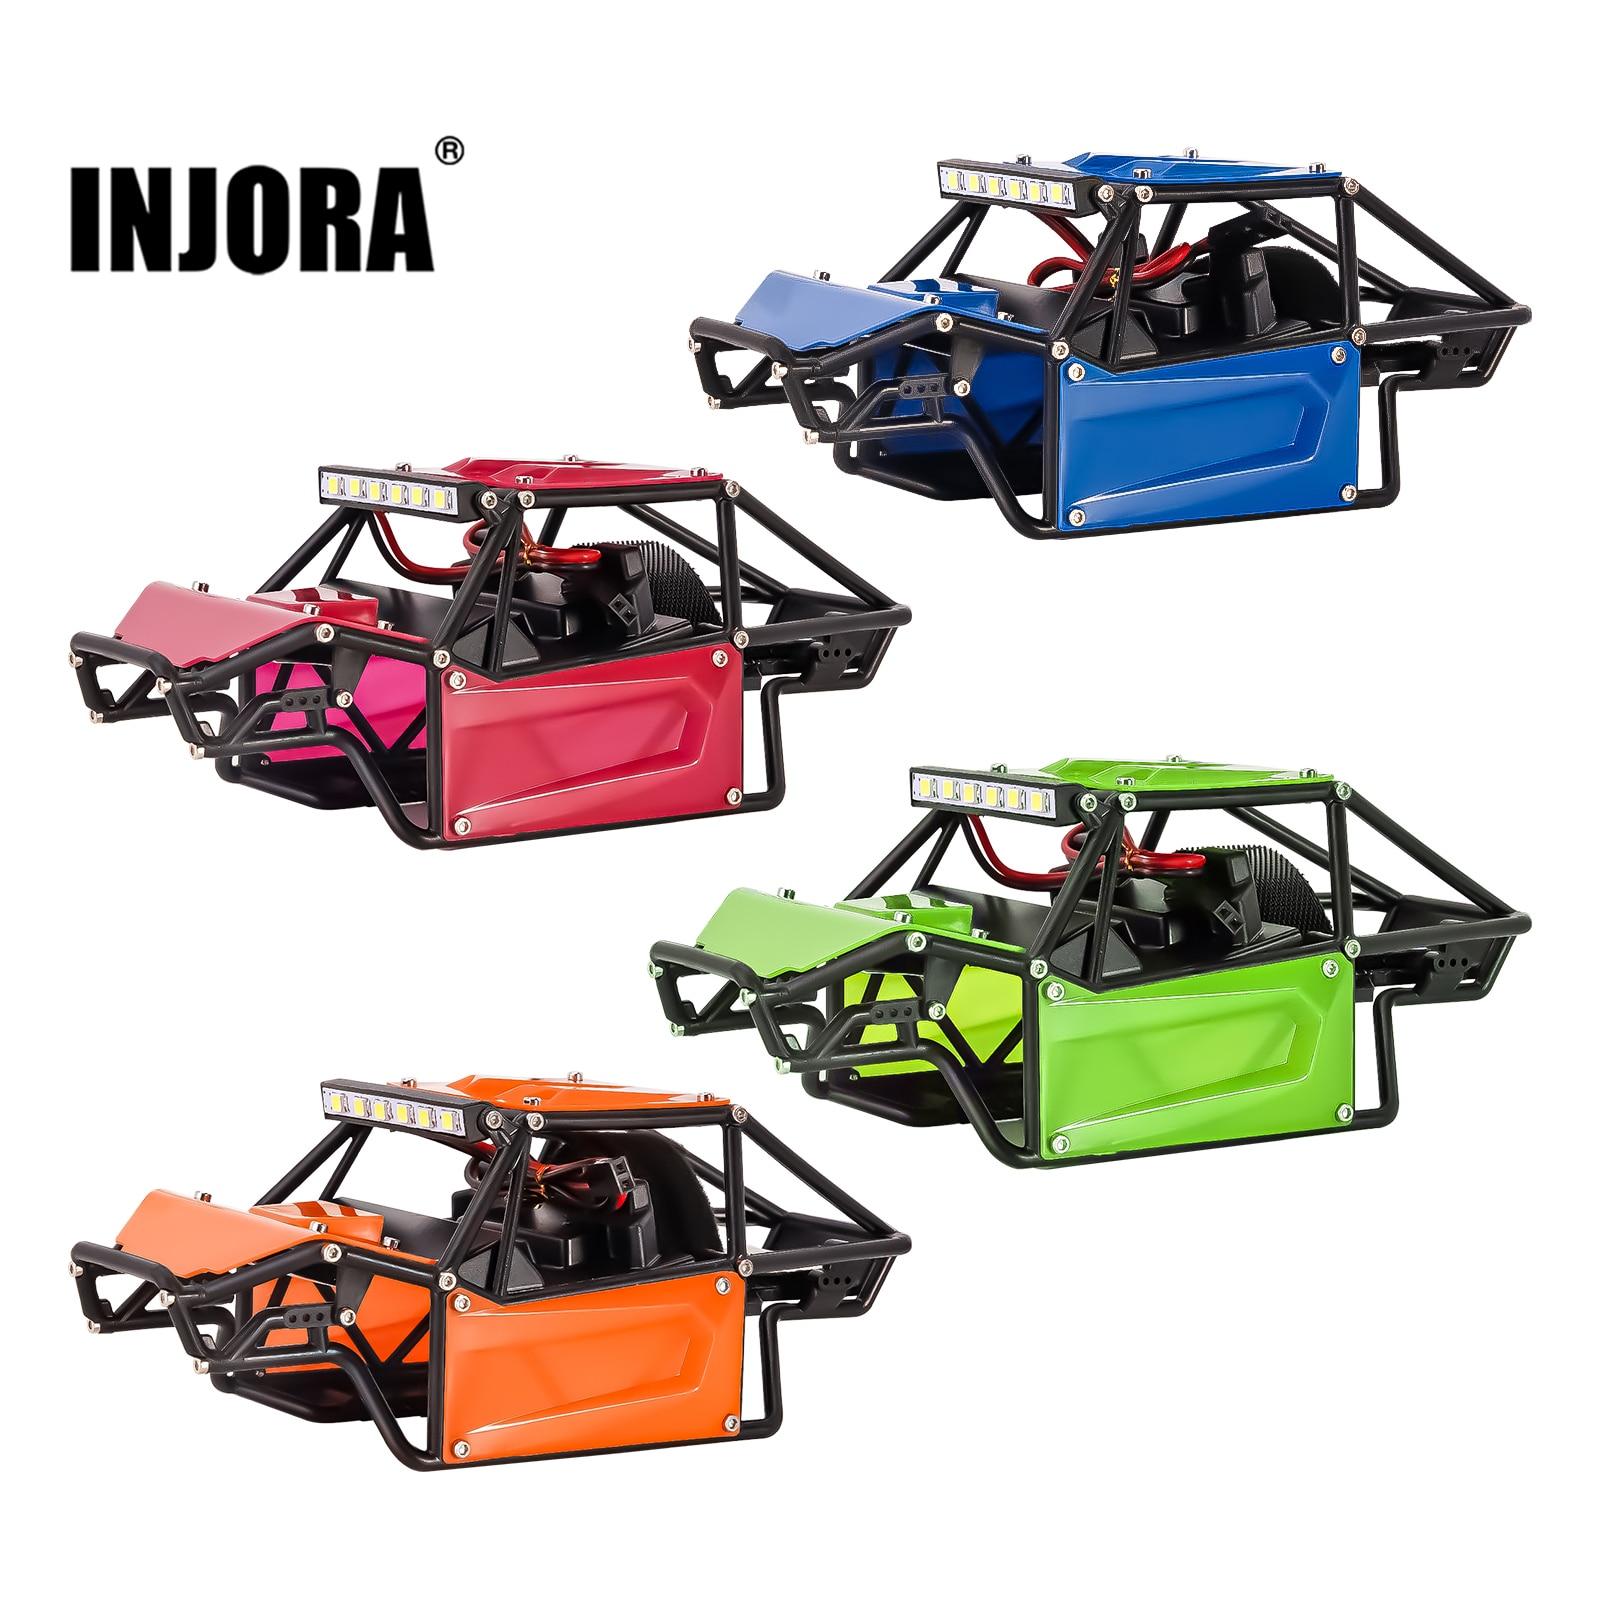 INJORA-Nylon-Rock-Buggy-Body-Shell-Chassis-Kit-for-1-24-RC-Crawler-Car-Axial-SCX24.jpg